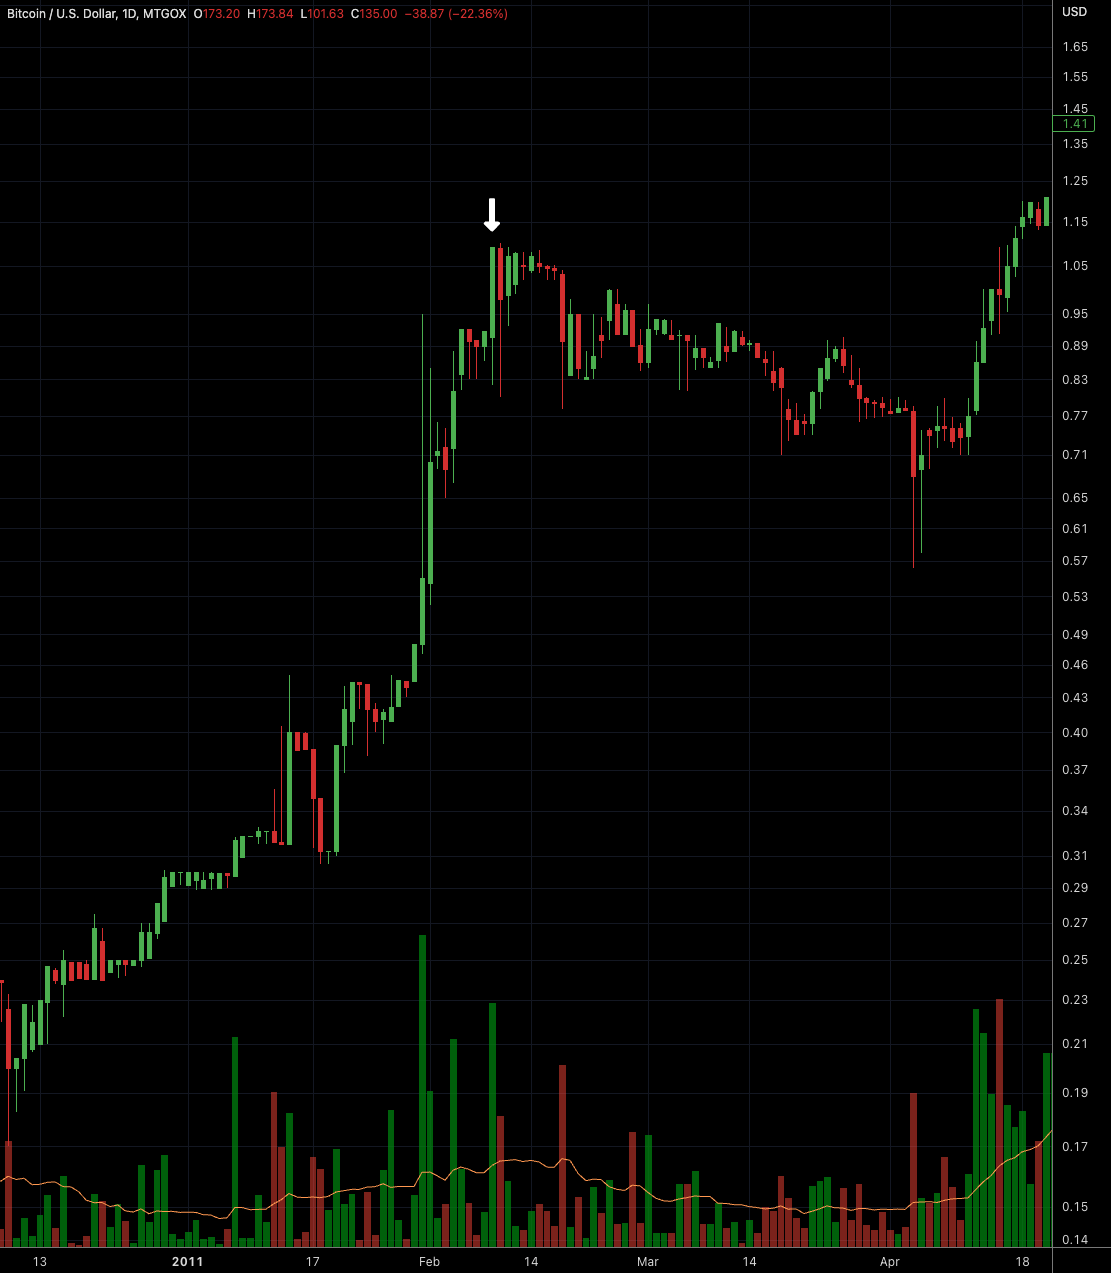 historical bitcoin price MTGOX february 9 2011